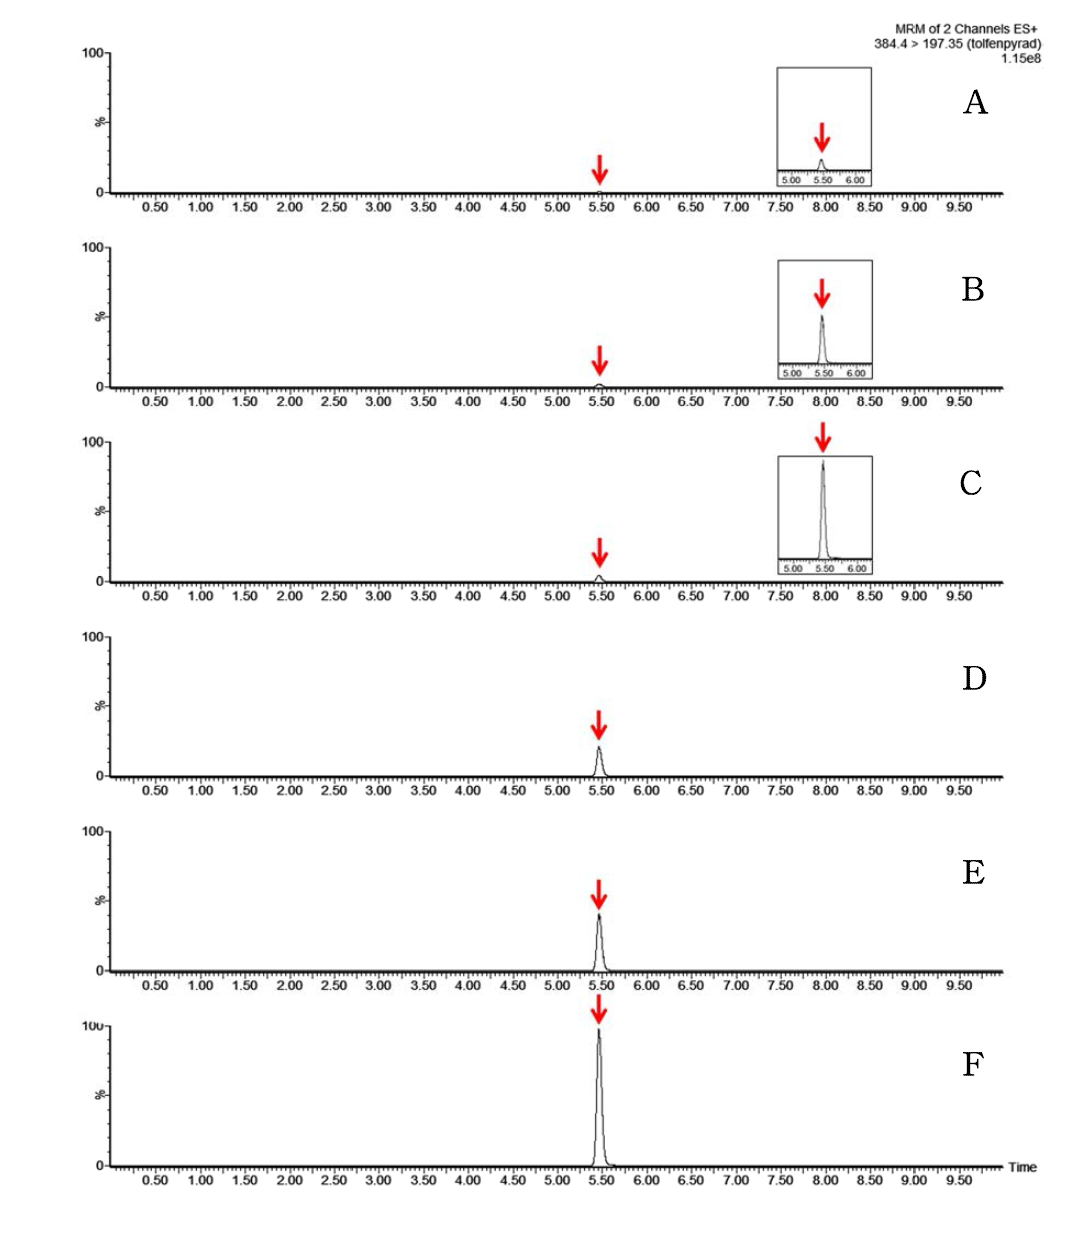 LC-MS/MS chromatograms of tolfenpyrad standard in soybean matrix (A) 0.001 mg/kg, (B) 0.005 mg/kg, (C) 0.01 mg/kg, (D) 0.05 mg/kg, (E) 0.1 mg/kg, (F) 0.25 mg/kg